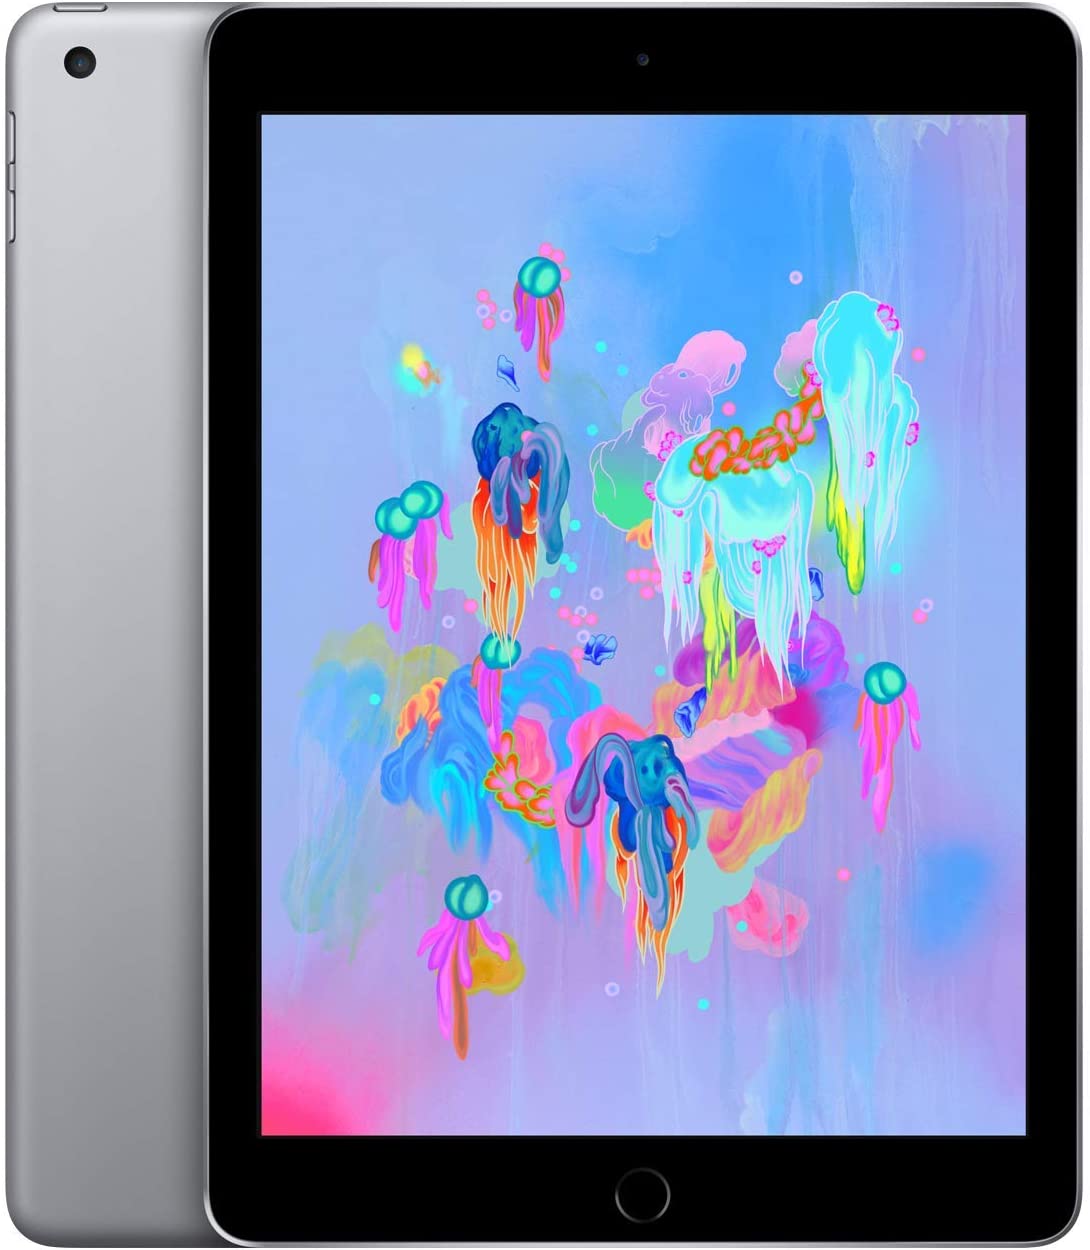 Apple iPad 6th Gen 128GB Wi-Fi Space Gray - New Screen Protector (Exc)